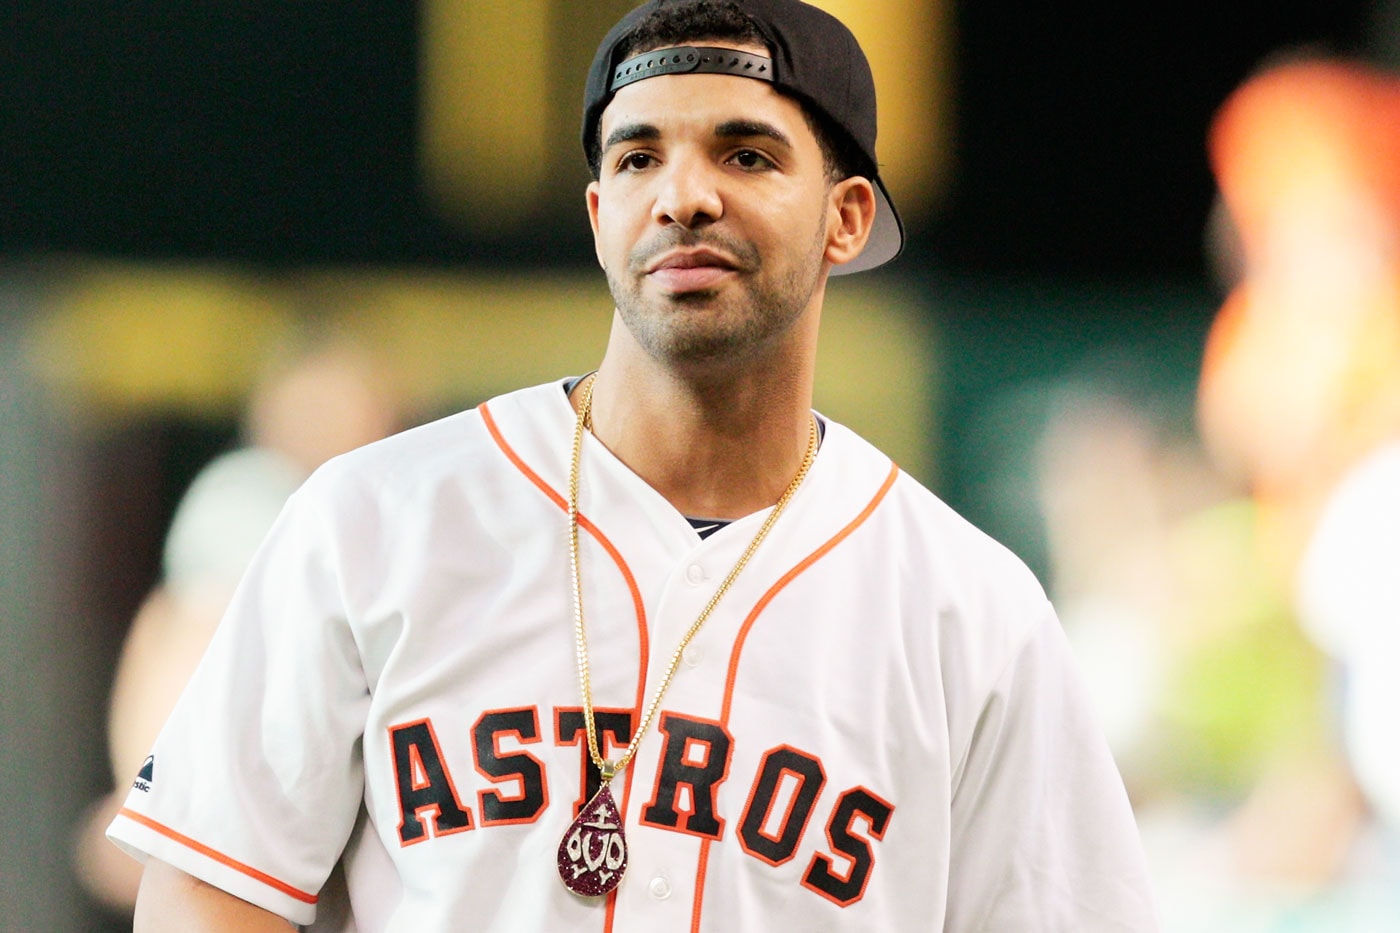 Three New Drake Songs Debut on Billboard Hot 100